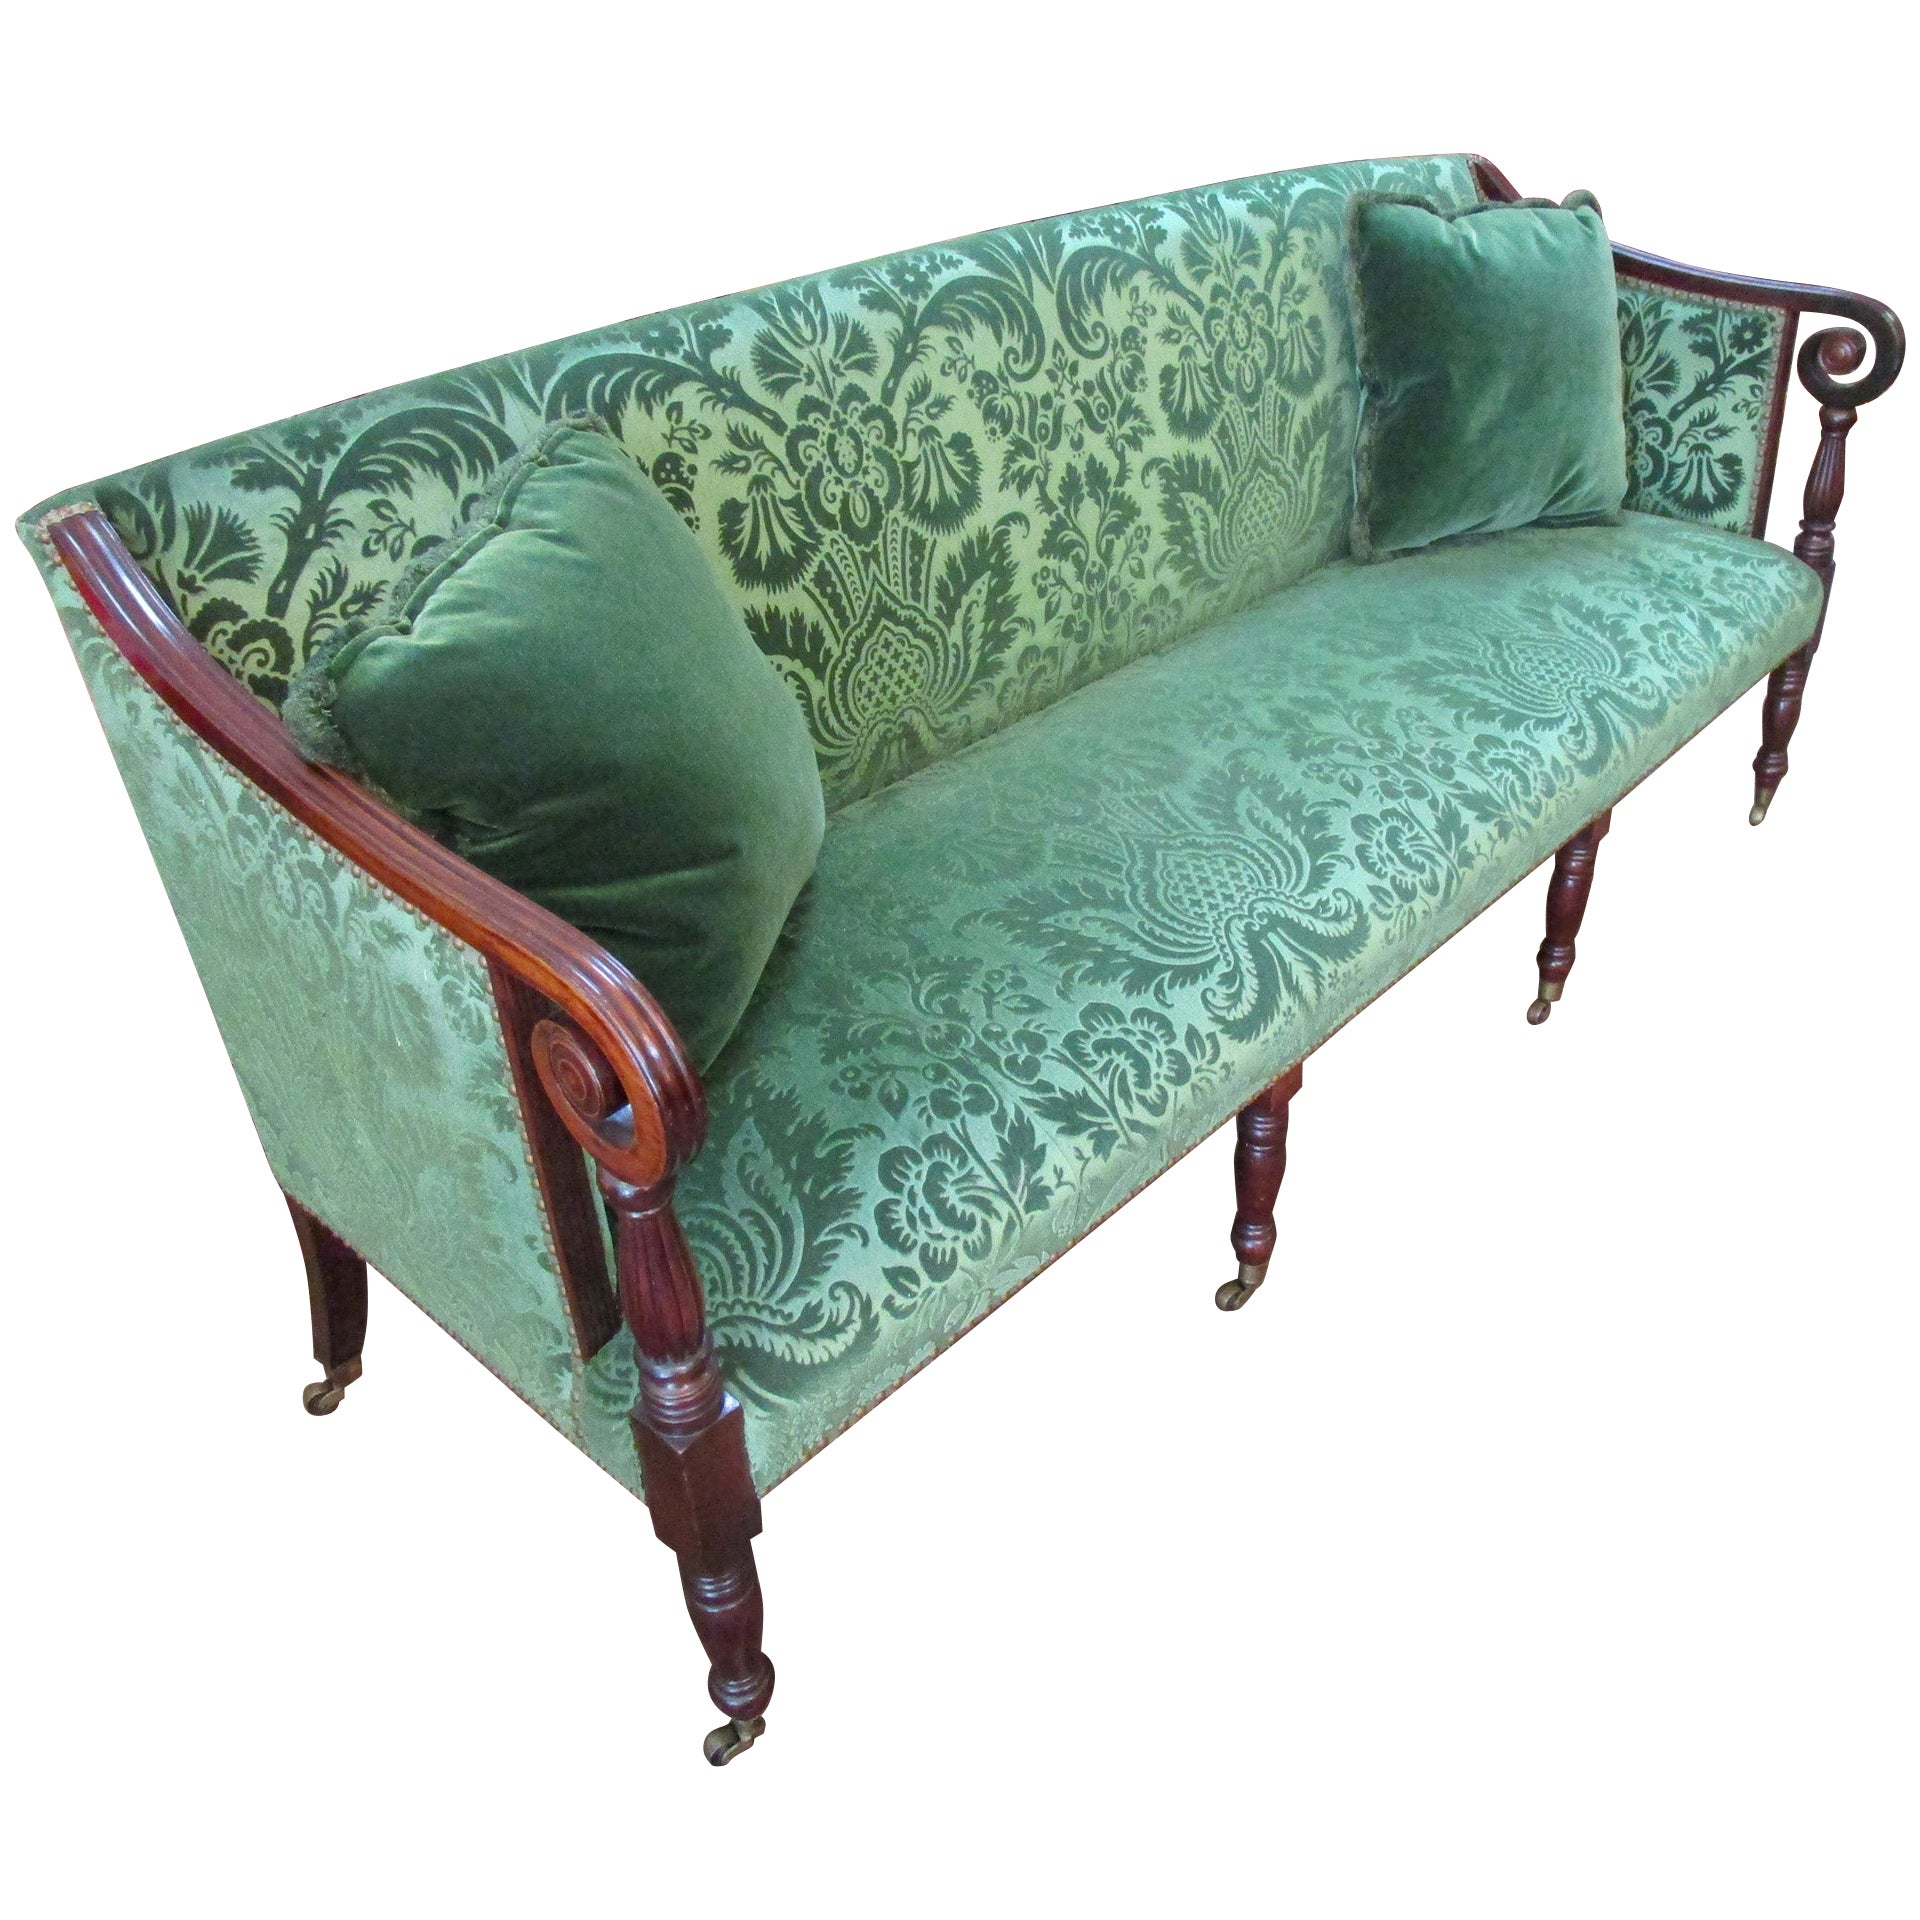 Sheraton English English Carved Mahogany Upholstered Sofa circa 1820 